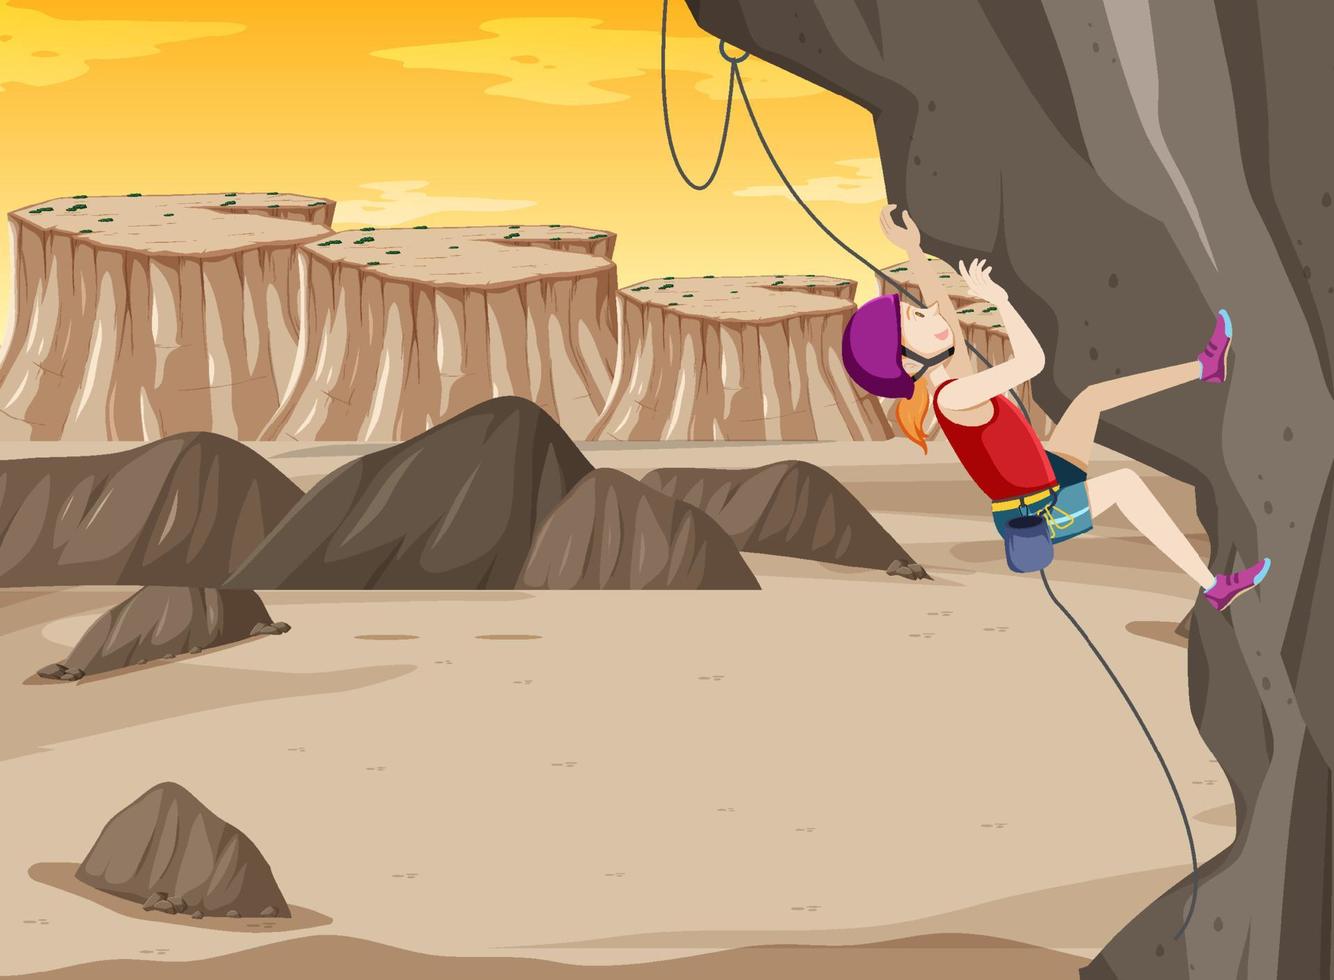 Rock climbing scene with woman climbing at sunset vector